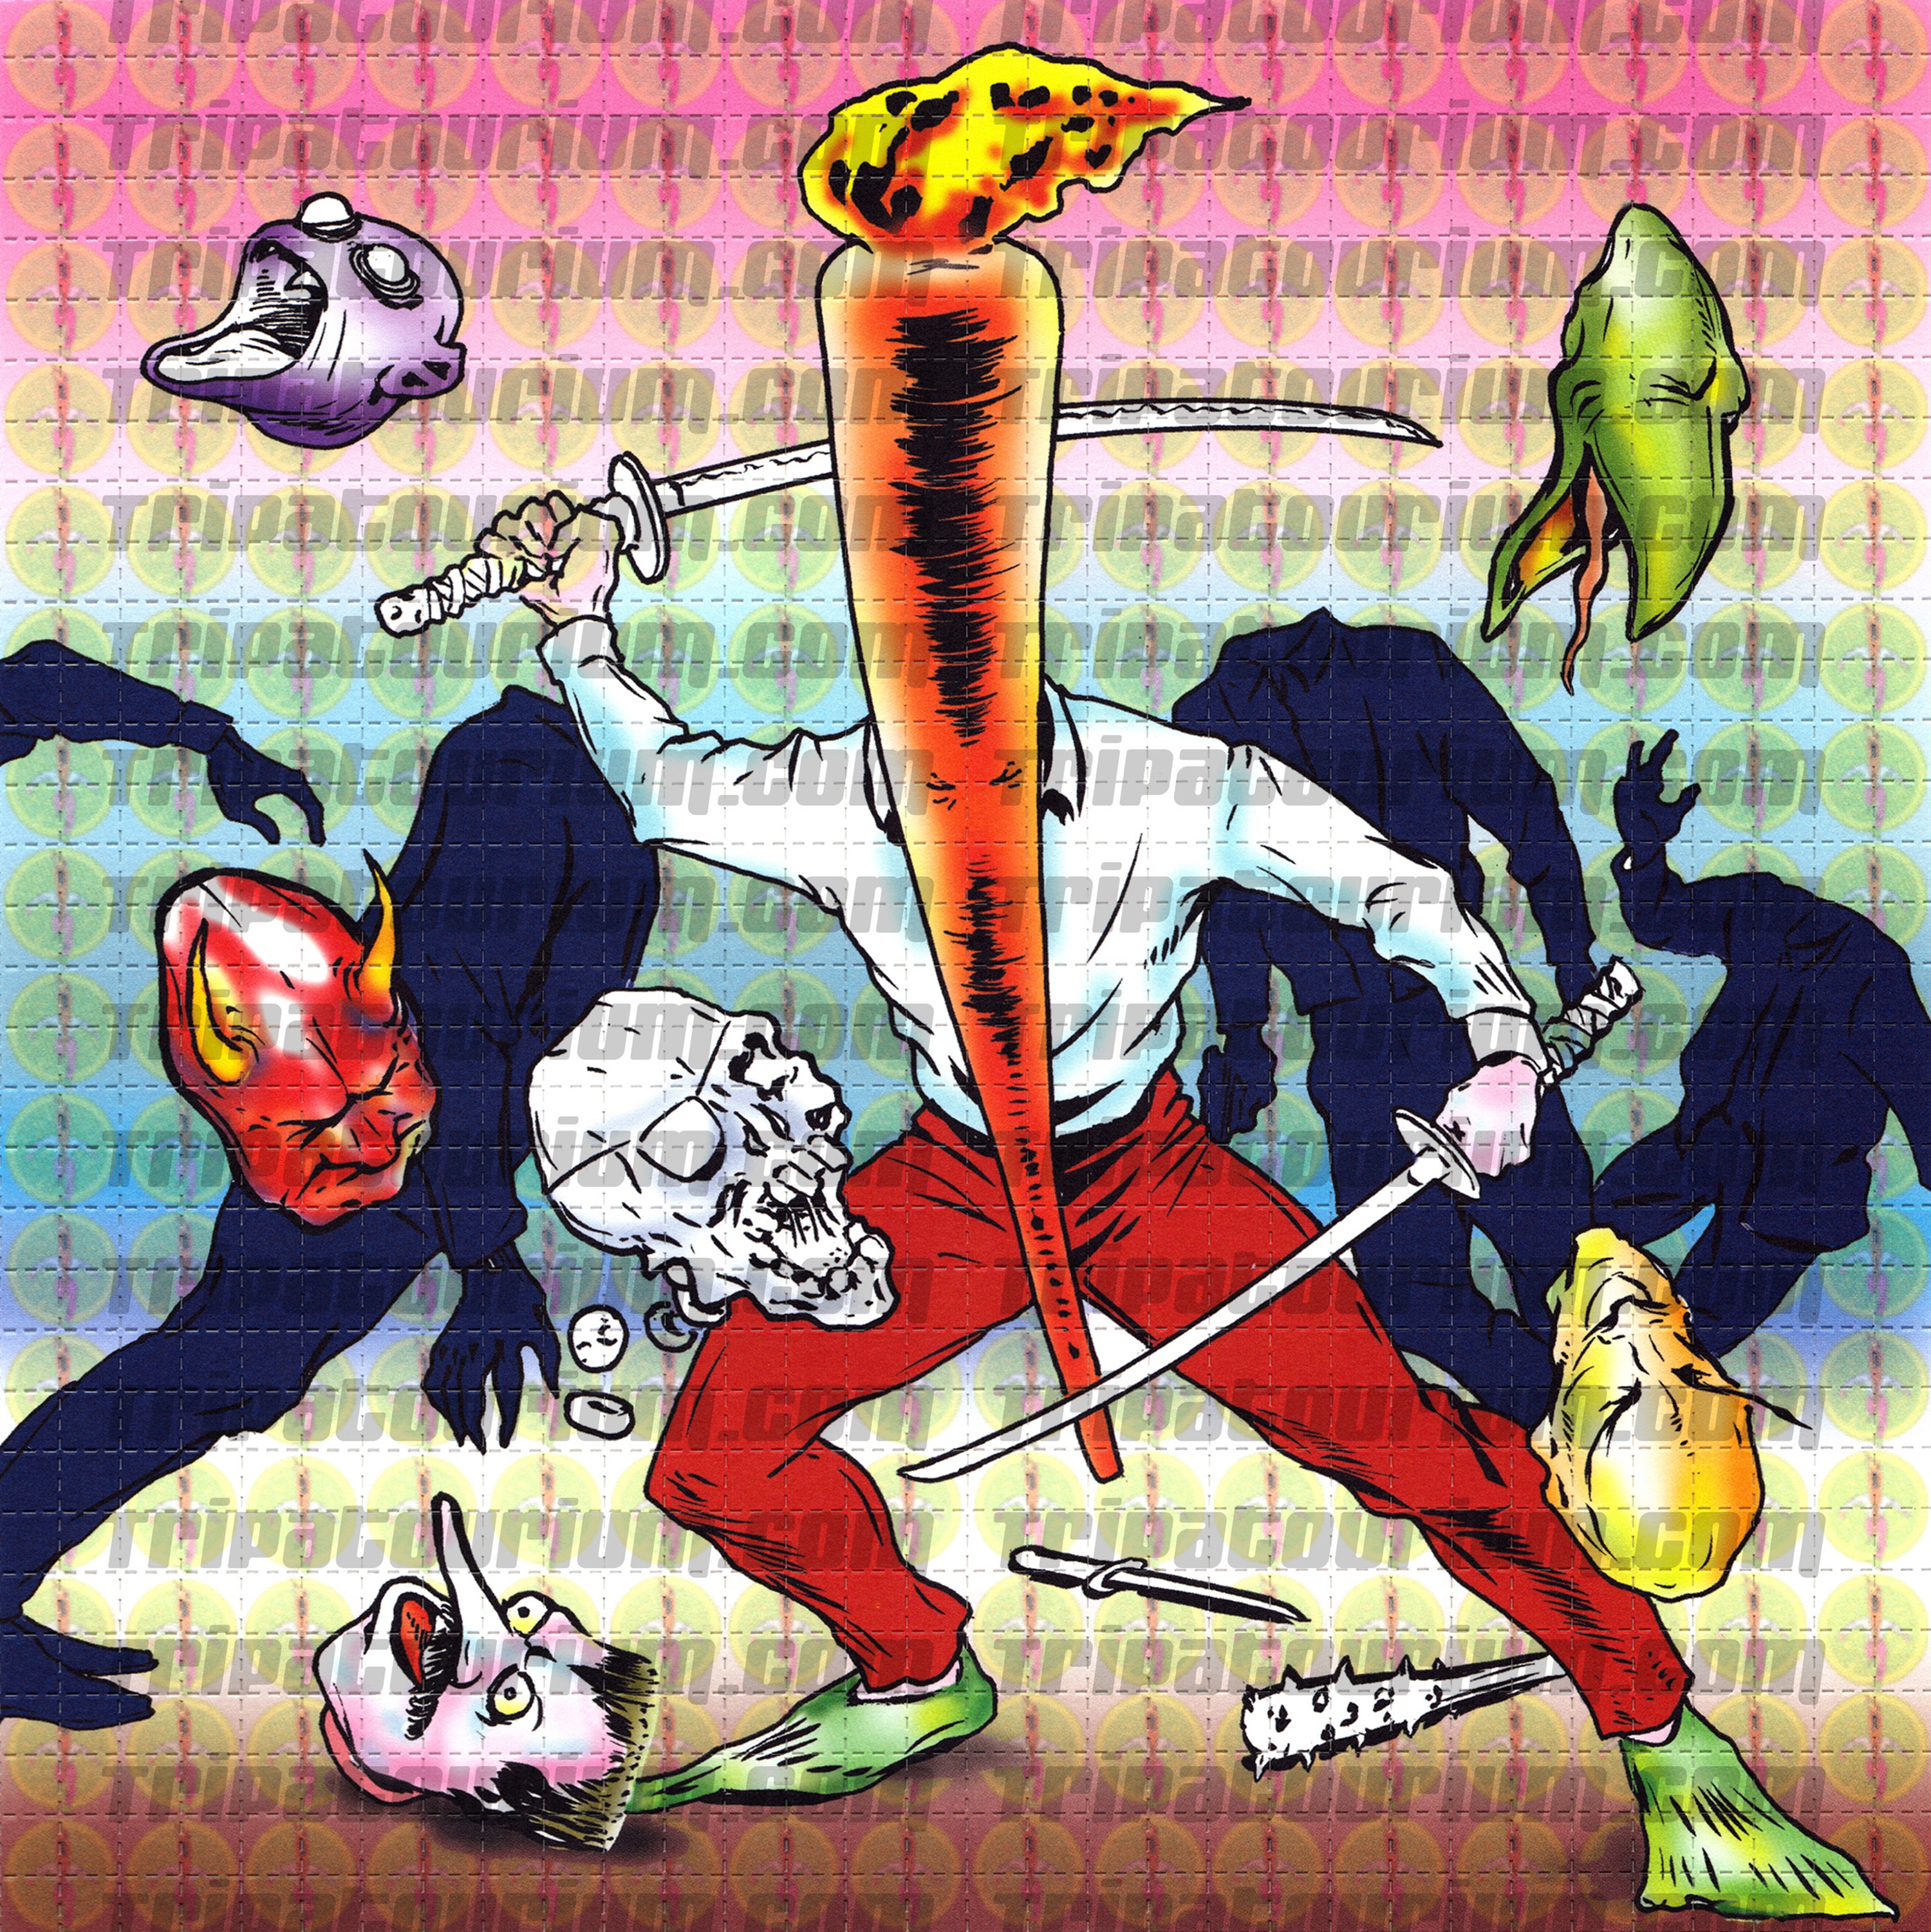 A scan of the LSD Blotter Art Print The Flaming Carrot by Bob Burden